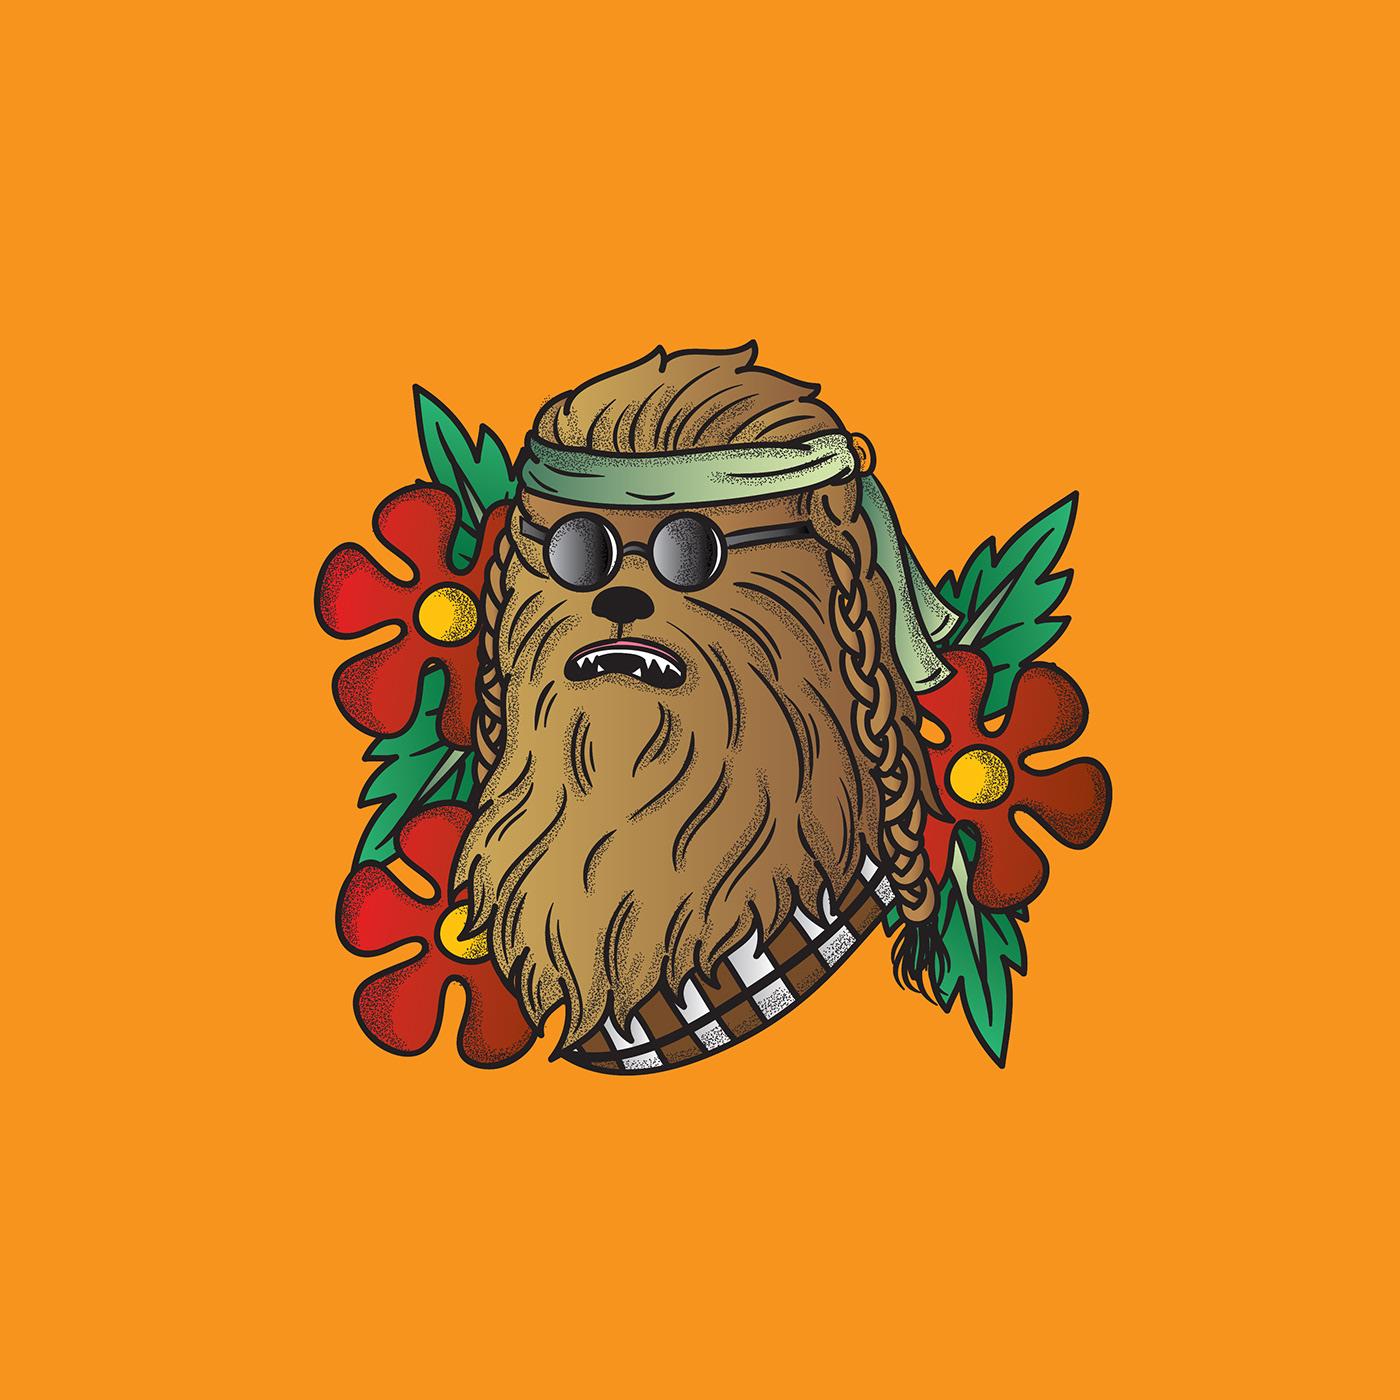 AmericanTraditional Chewbacca darthvader grogu Leia oldschool Starwars stormtrooper tattoo vintage